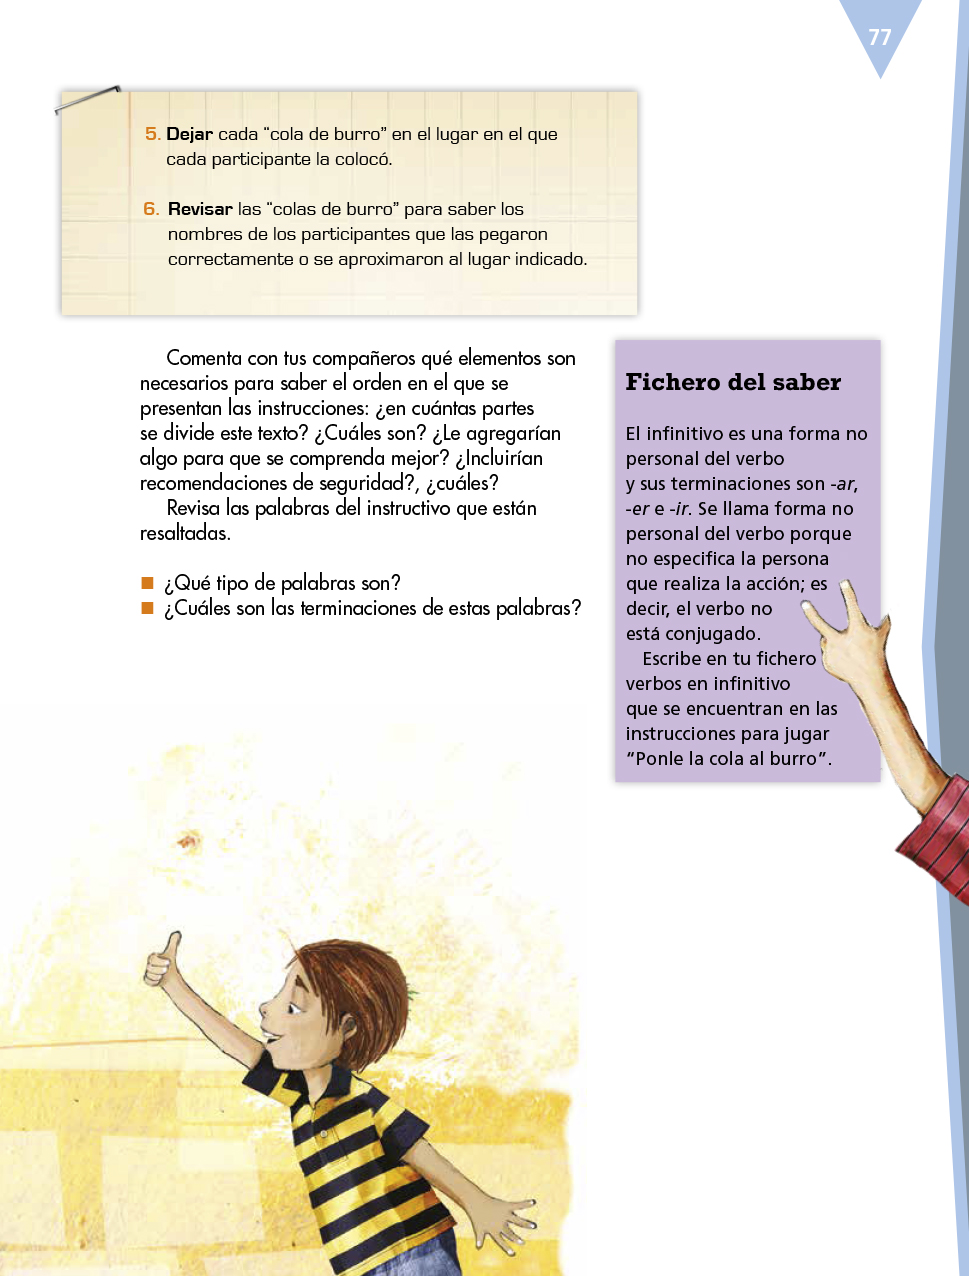 Español sexto grado 2017-2018 - Página 77 de 186 - Libros de Texto Online